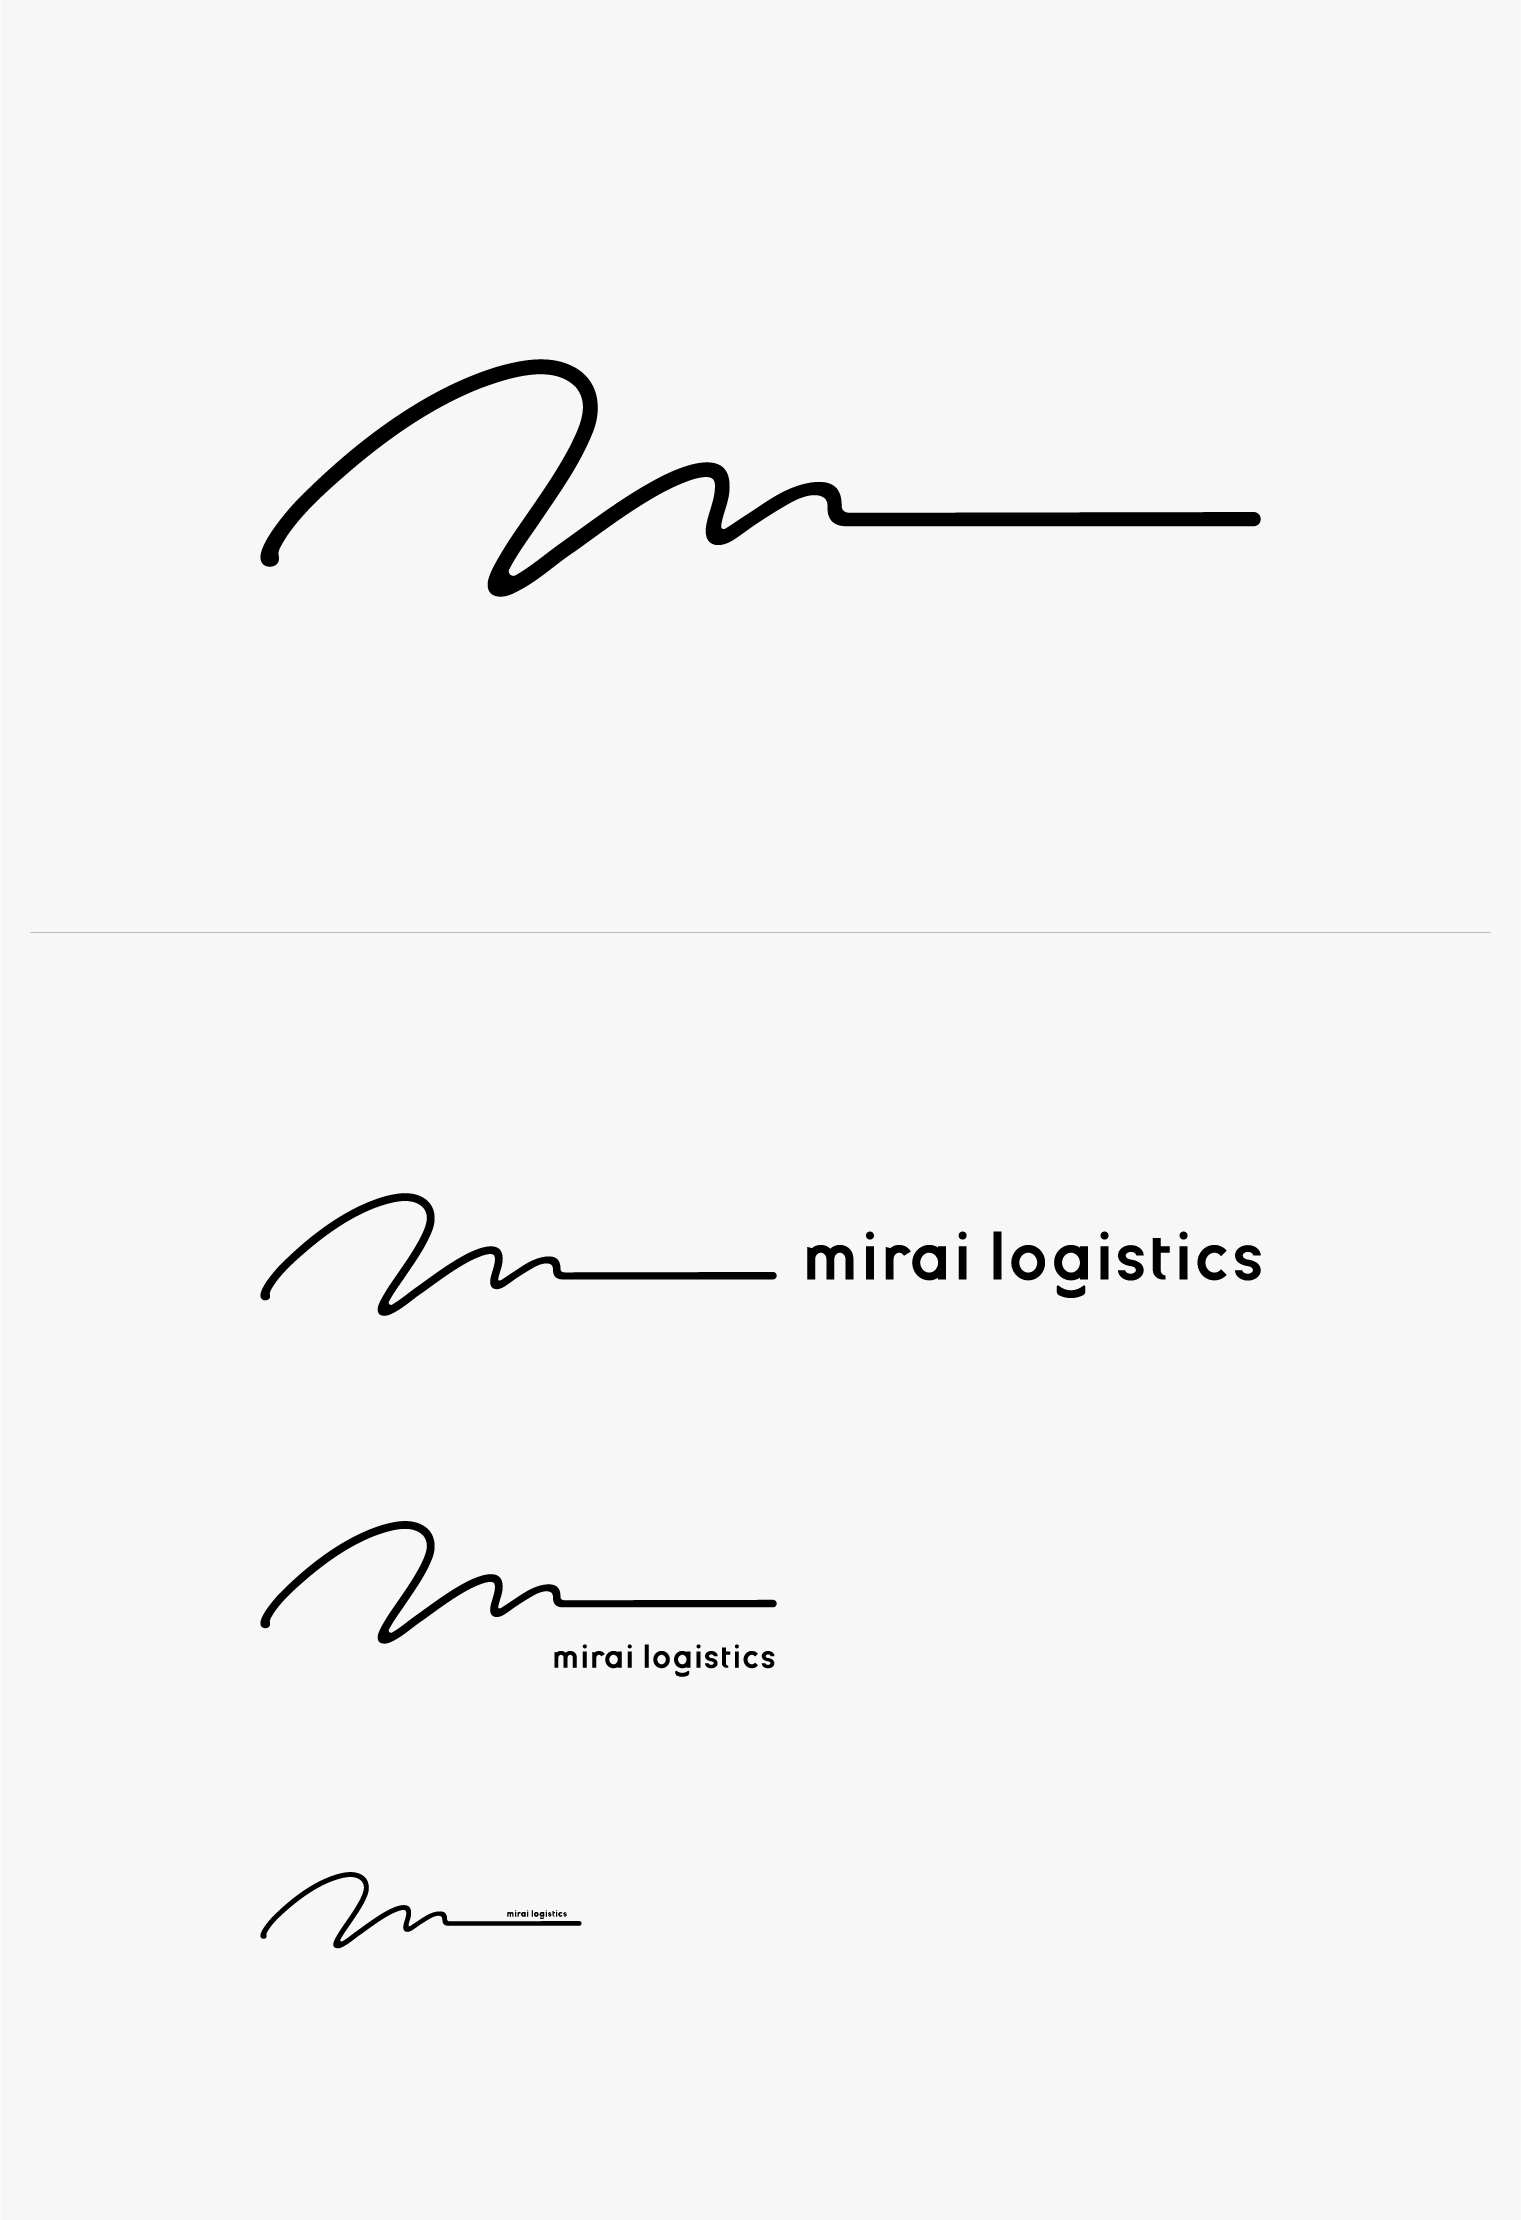 mirai計画 ブランディング ロゴデザイン  運送 物流